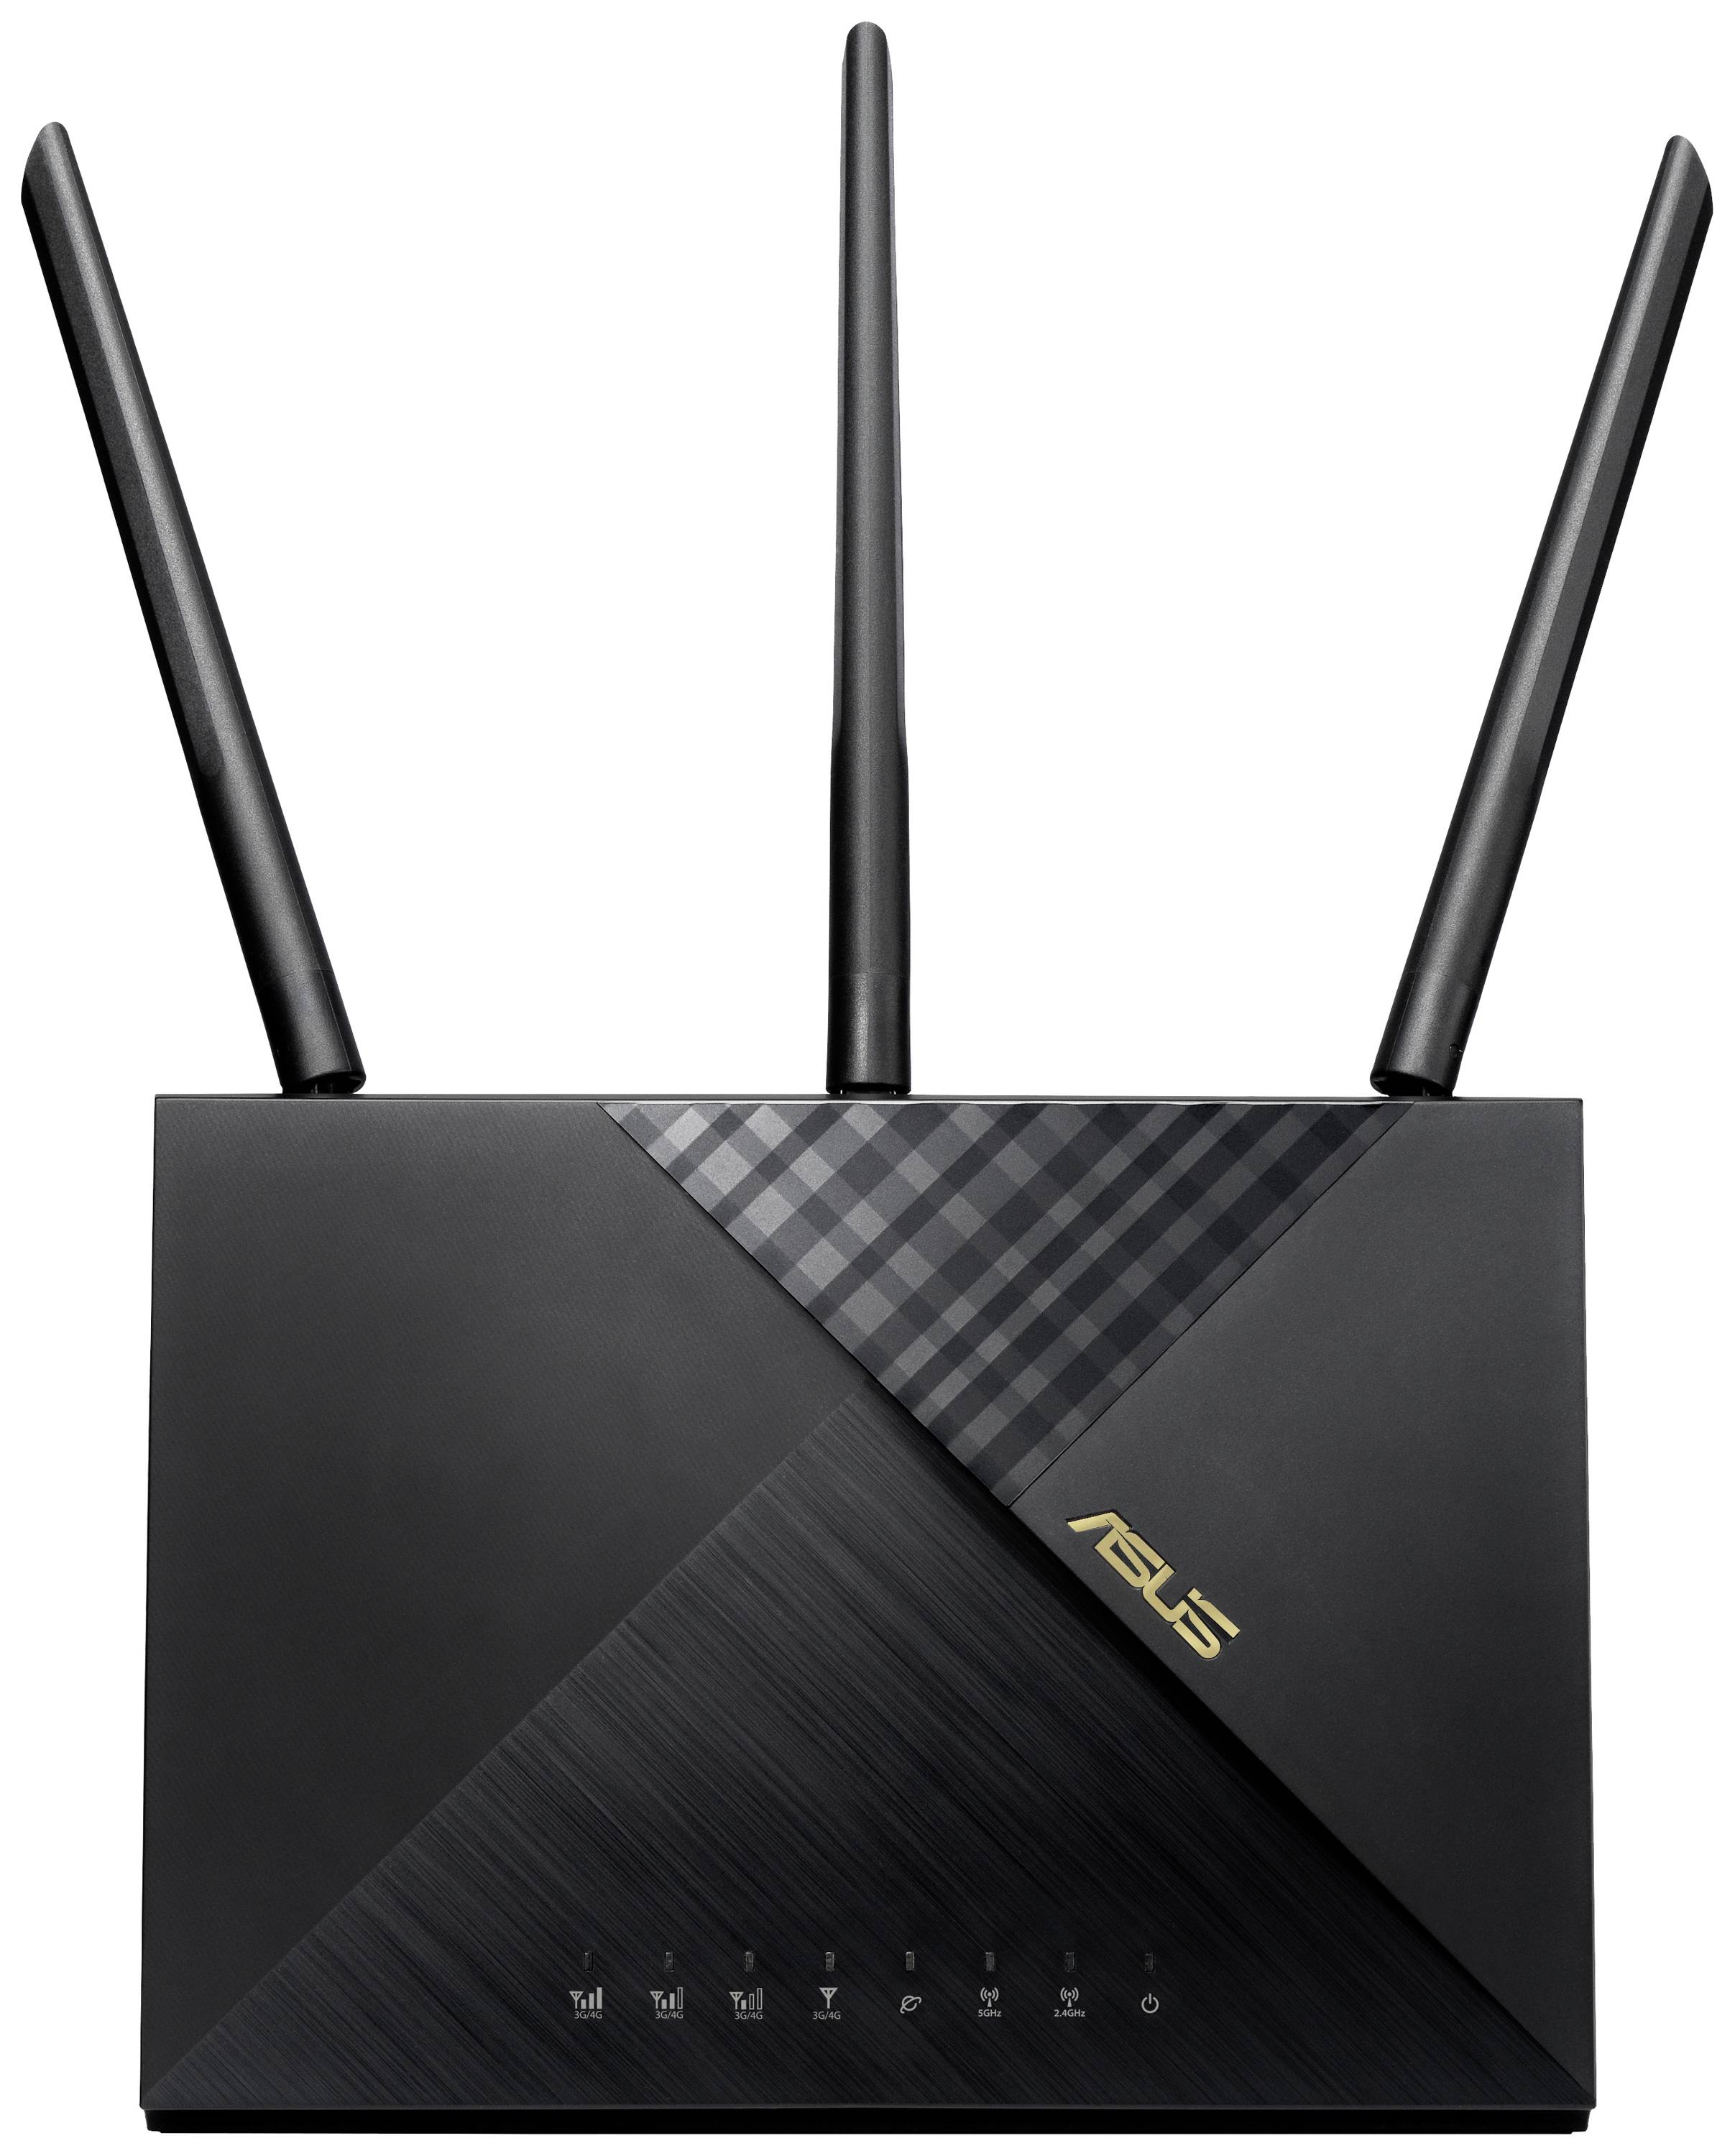 Asus 4G-AX56 AX1800 Cat. 6 Router Built-in modem: UMTS, LTE 2.4 GHz, 5 GHz 1201 MBit/s<br |